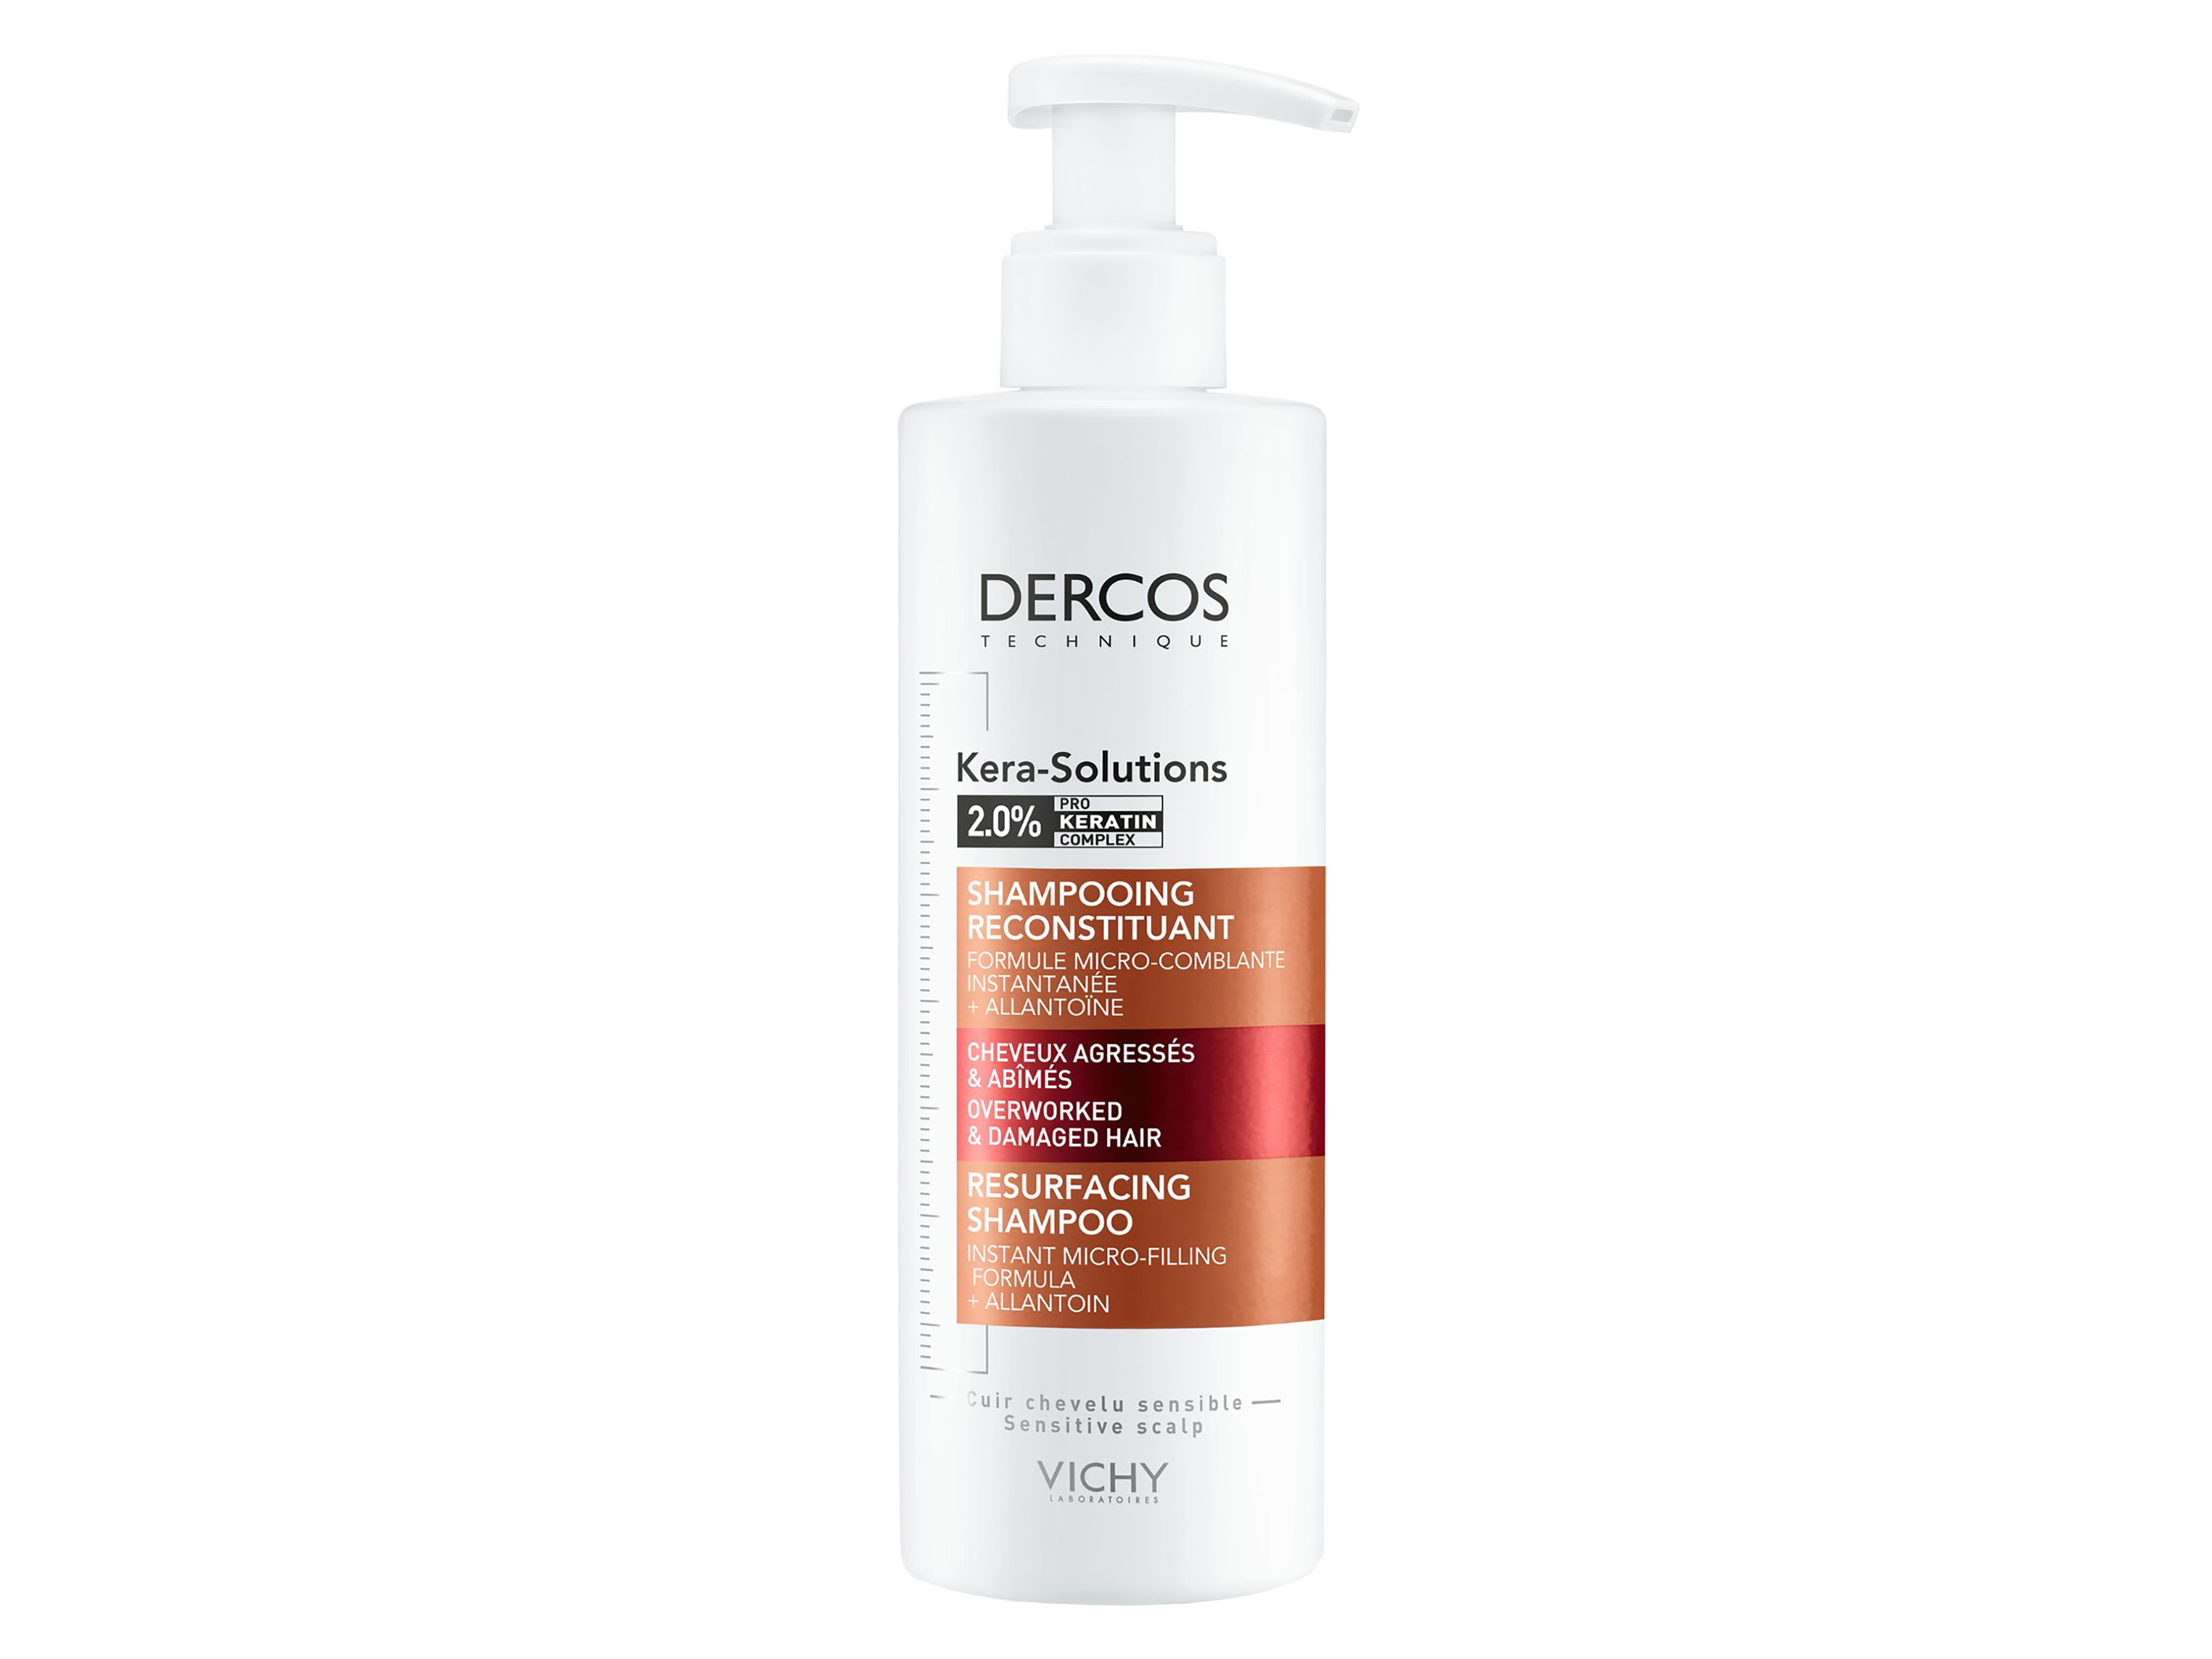 Vichy Dercos Kera-Solutions Resurfacing Shampoo, 250 ml